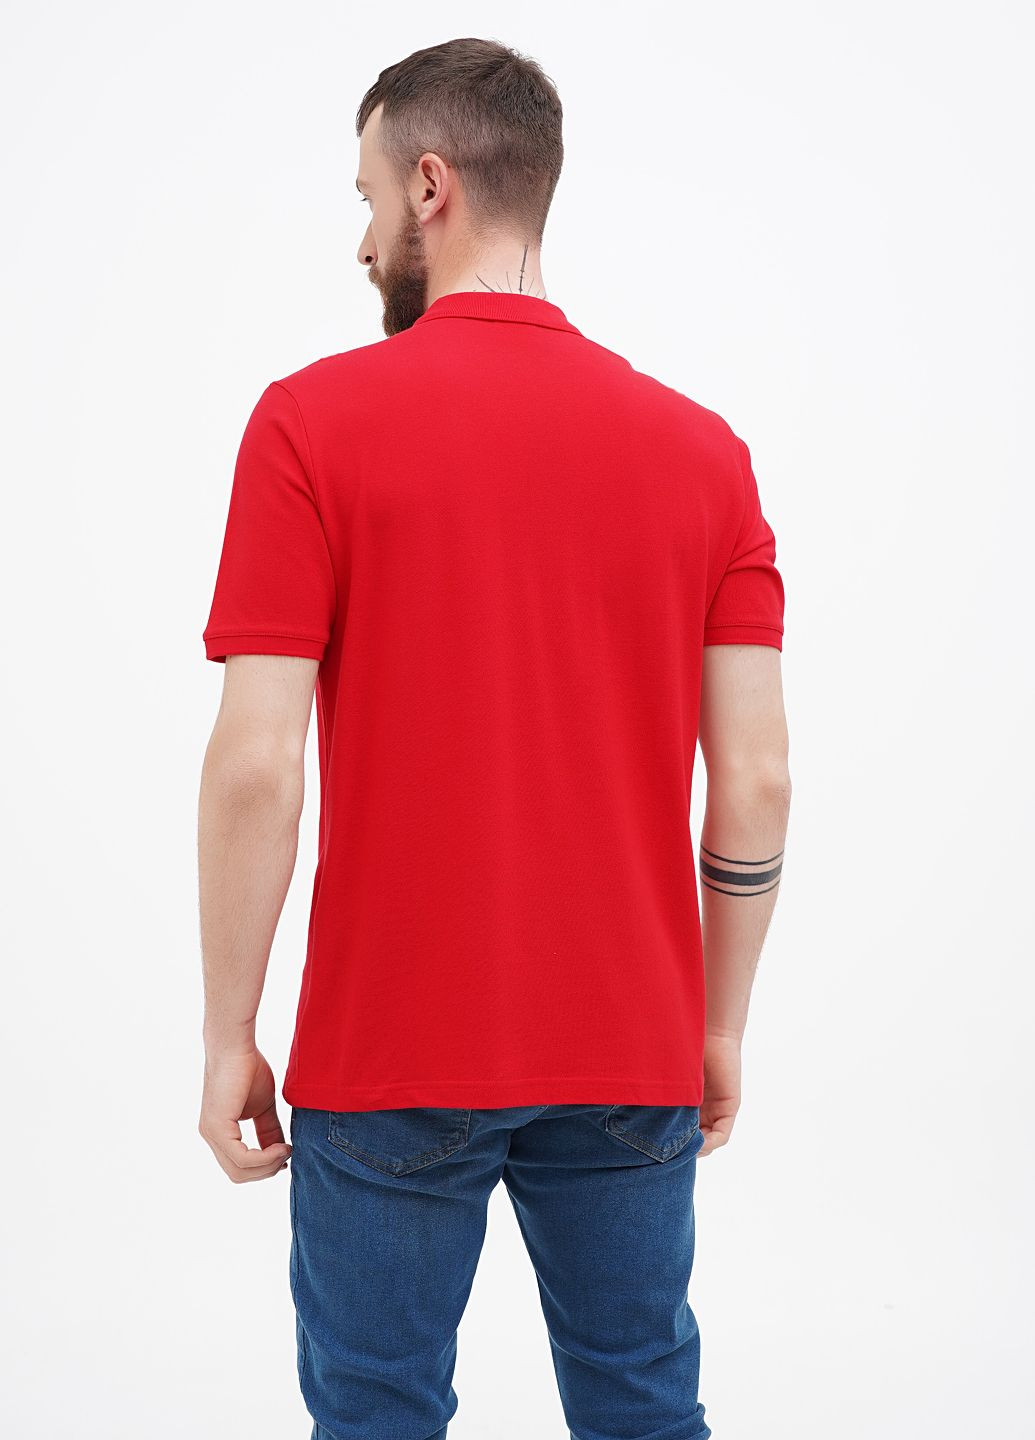 Красная футболка-футболка поло u.s. polo assn мужская для мужчин U.S. Polo Assn.